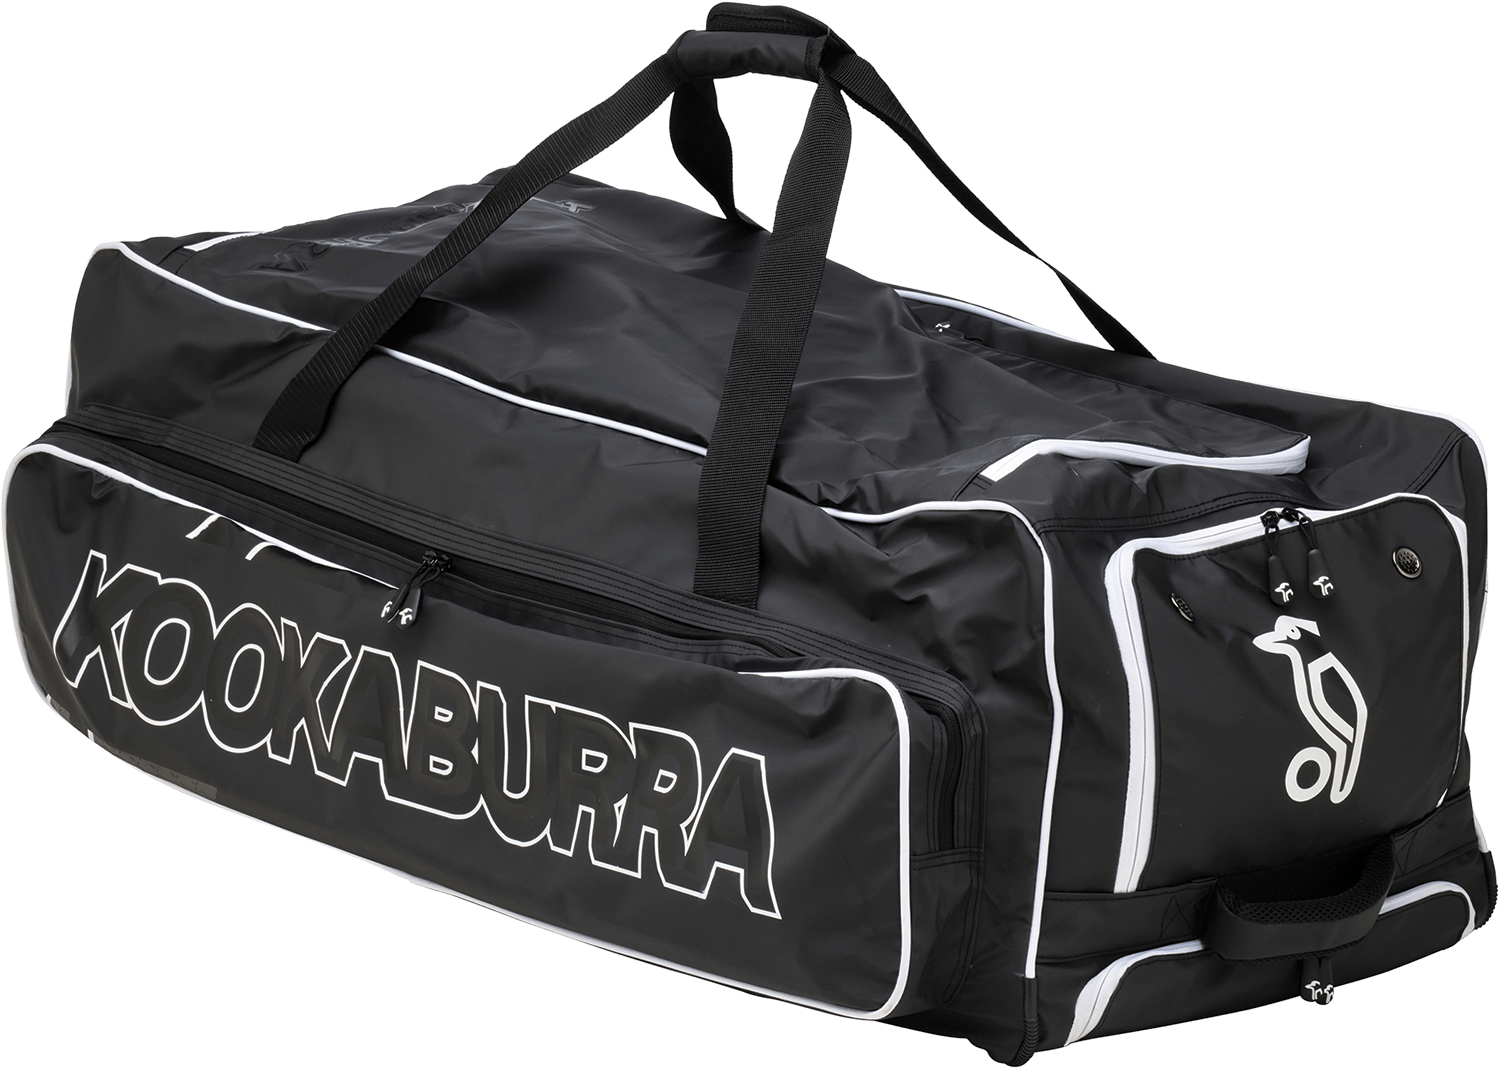 Kookaburra Cricket Bags White Kookaburra Pro Players 1.0 Wheelie Cricket Kit Bag